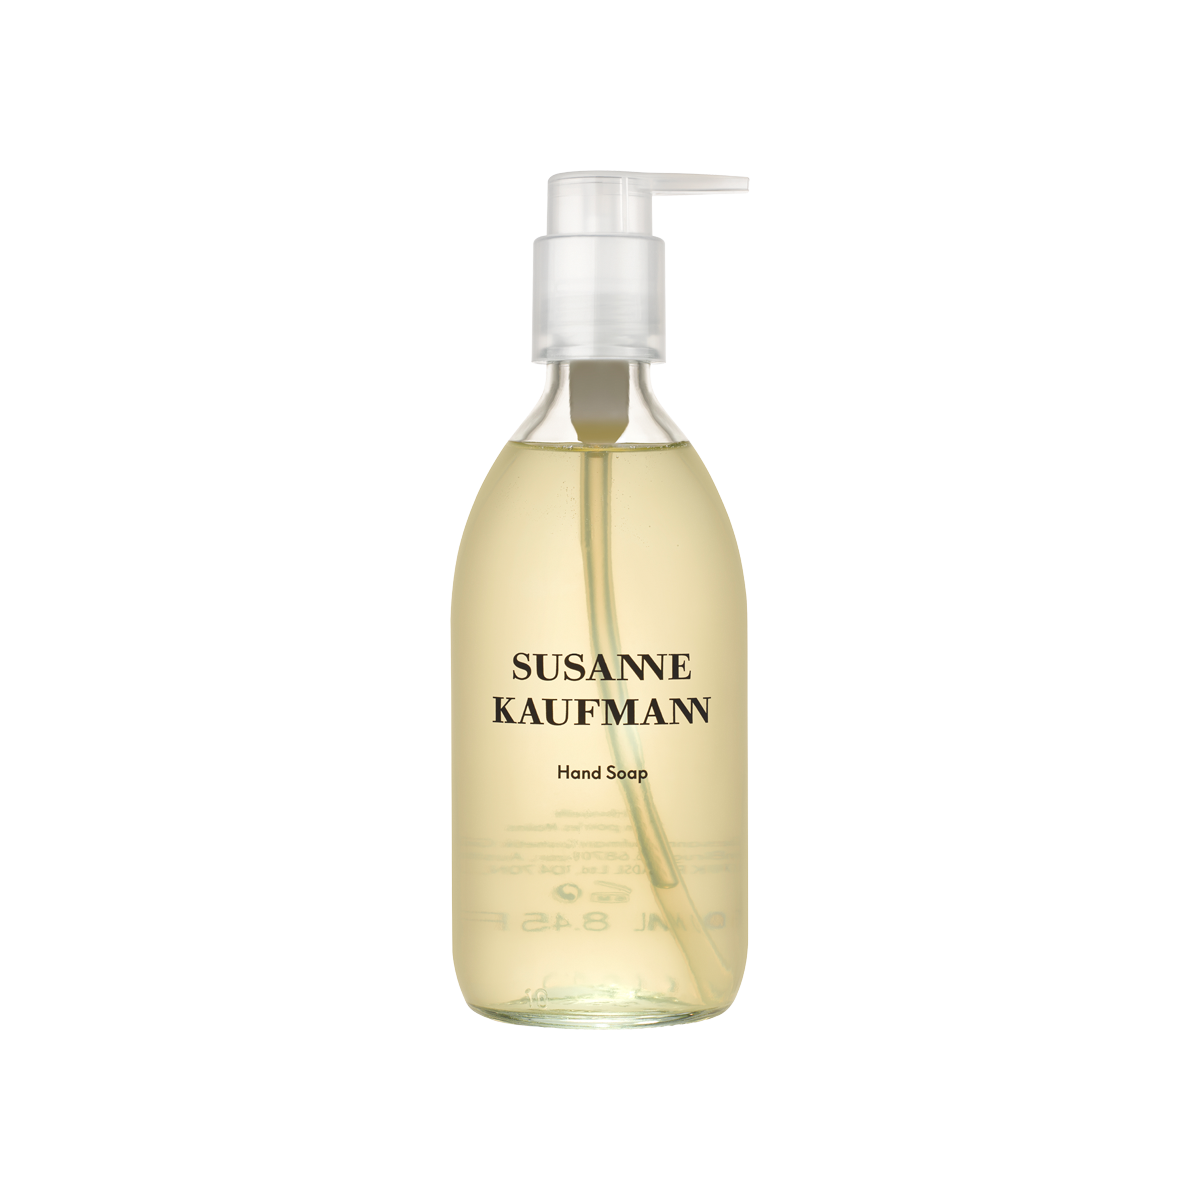 Susanne Kaufmann - Hand Soap